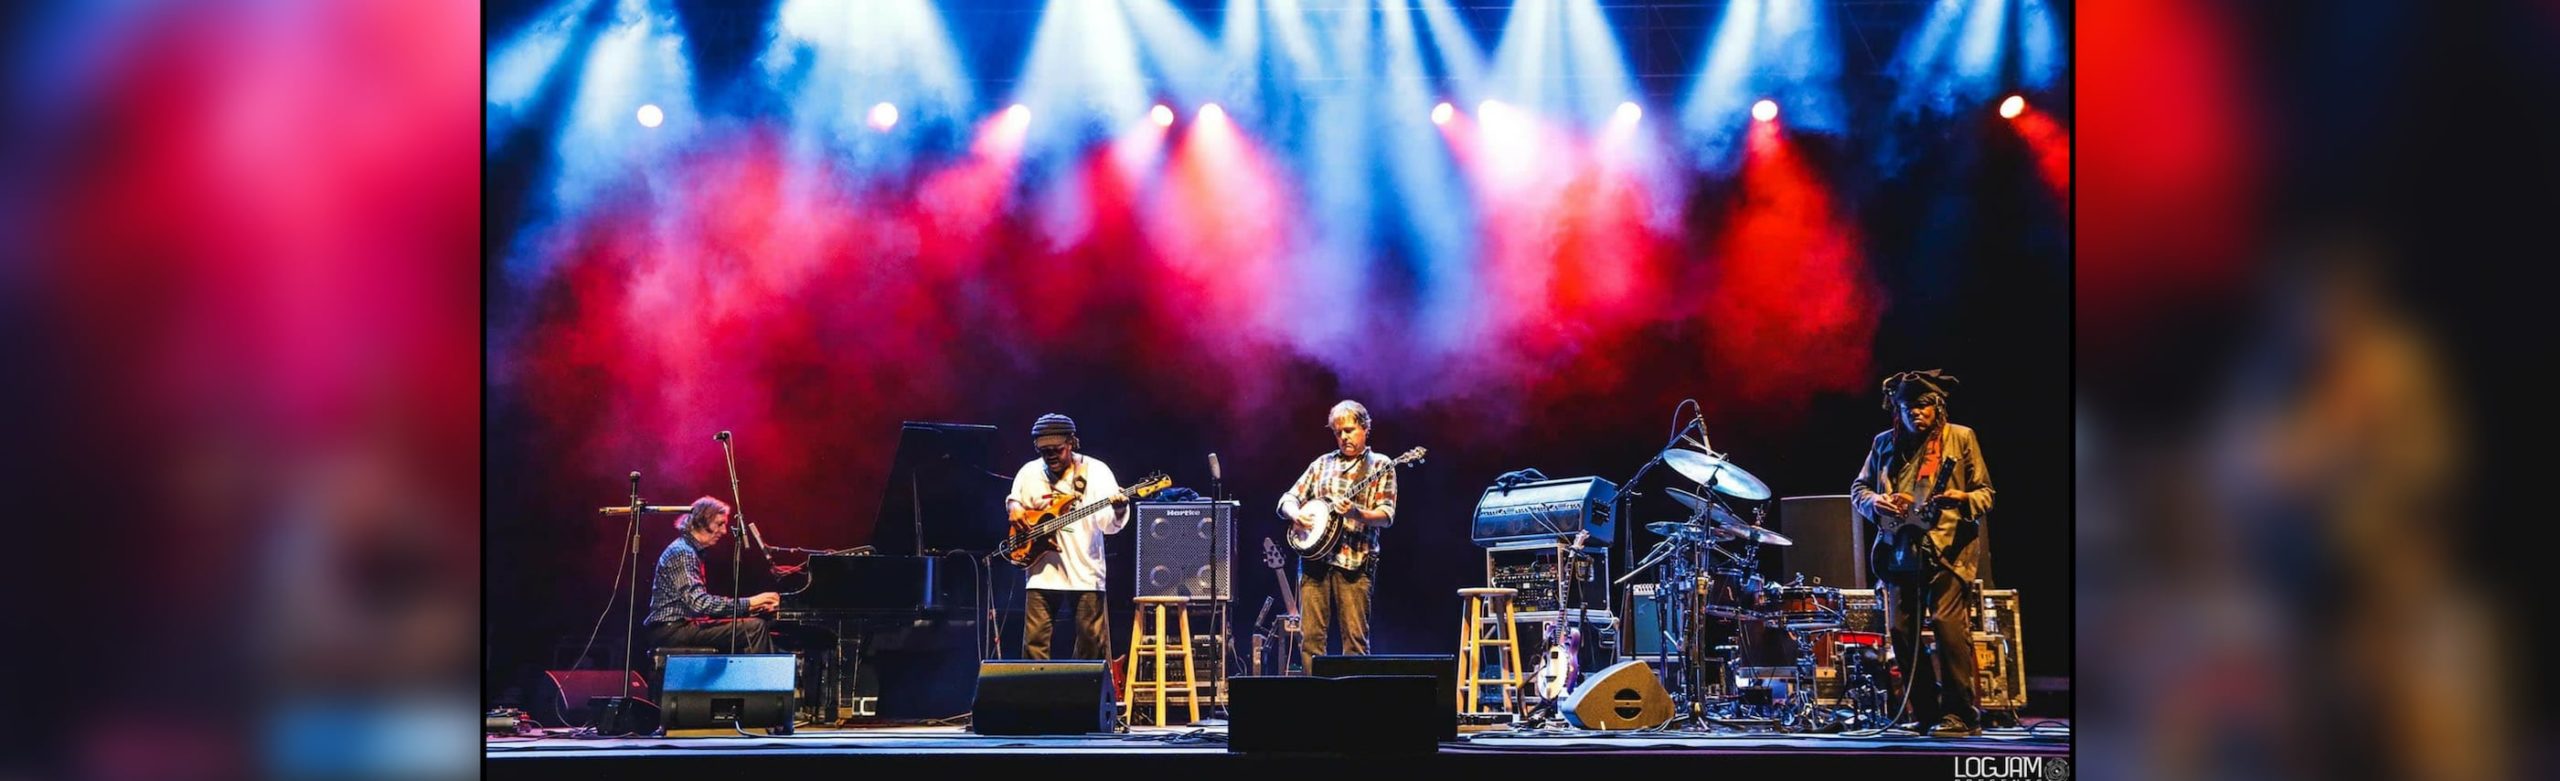 Grammy Award Winners Béla Fleck & The Flecktones Confirm Concert in Missoula Image